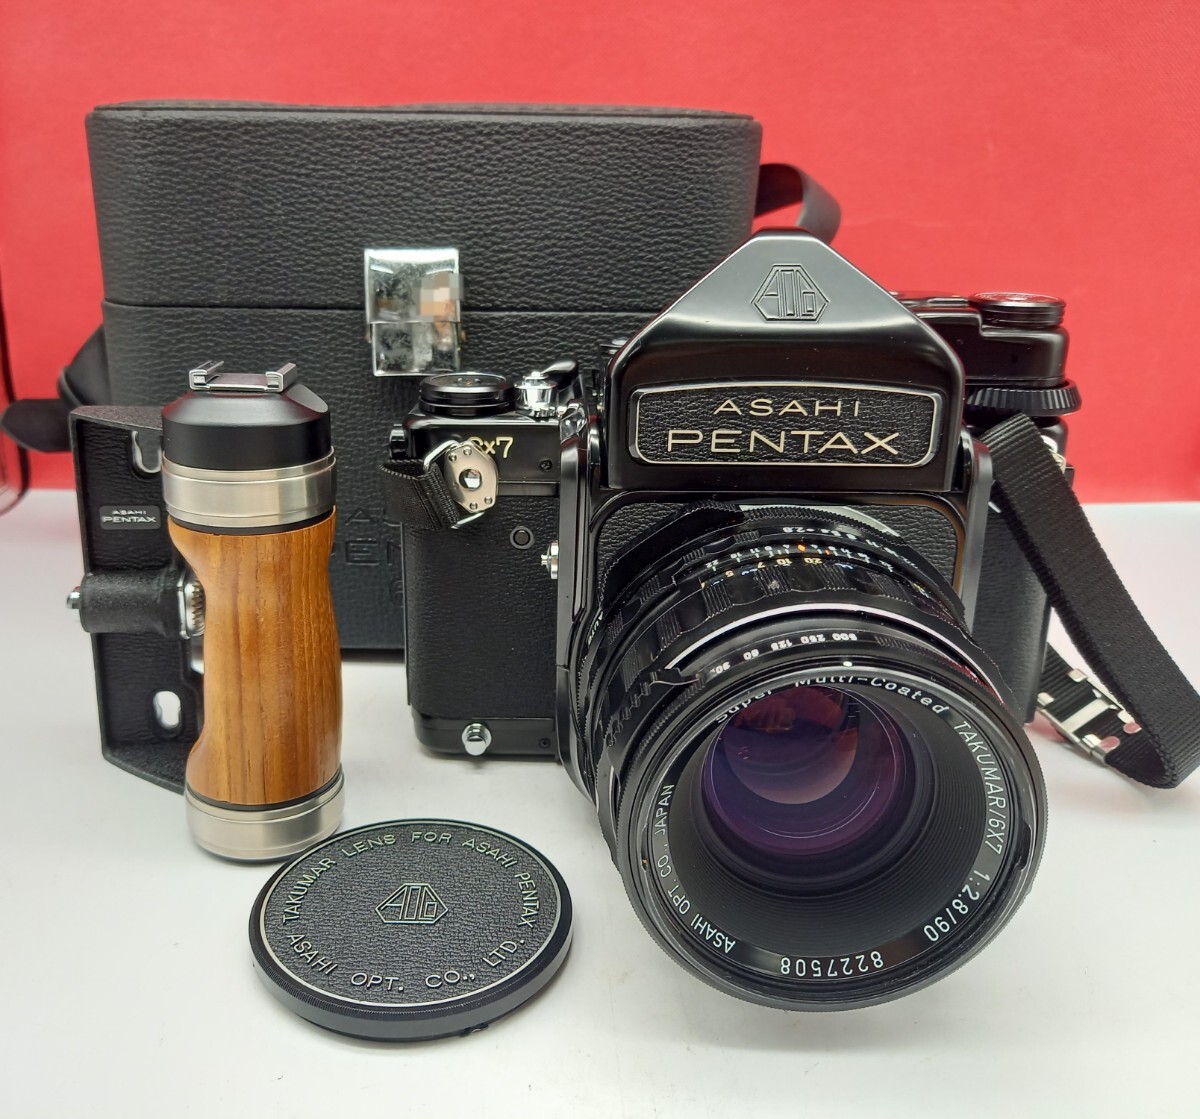 # PENTAX 6×7 корпус TAKUMAR 2.8/90 линзы TTL искатель shutter, люксметр OK средний размер пленочный фотоаппарат из дерева рукоятка Pentax 